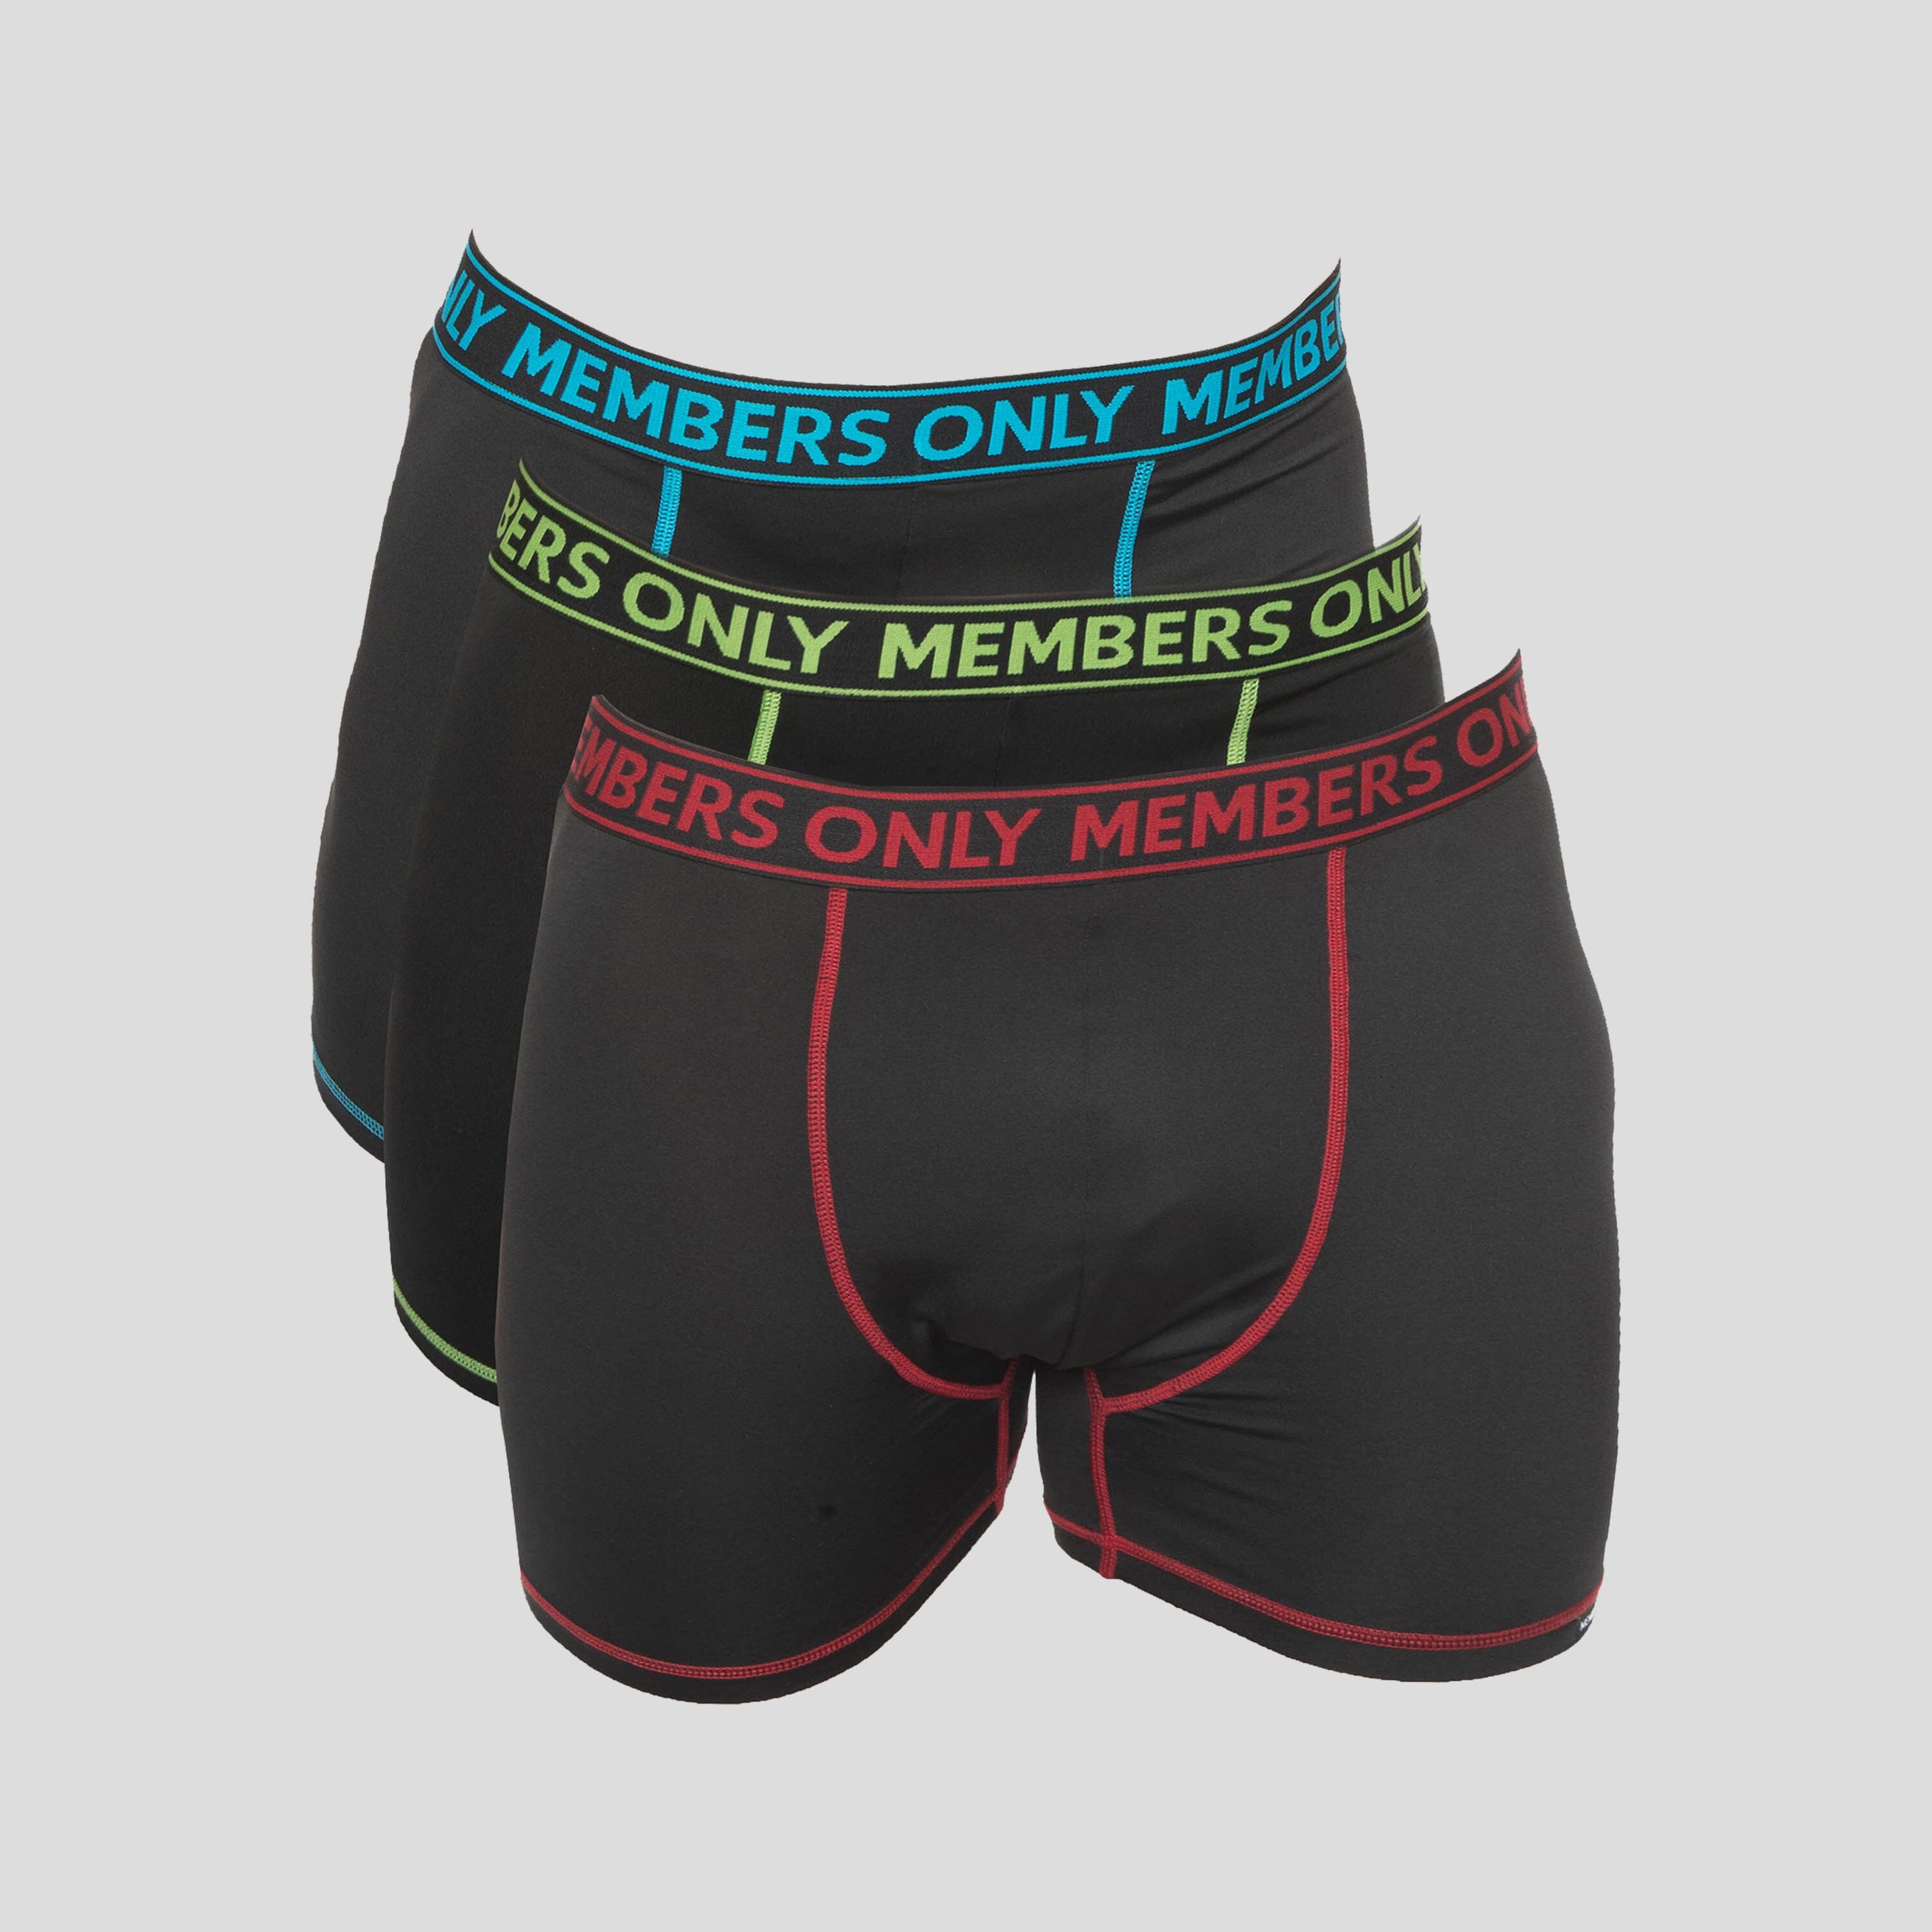 Members Only Men's 3 Pack Boxer Brief Underwear Cotton Spandex Ultra Soft &  Breathable, Underwear for Men - Black L